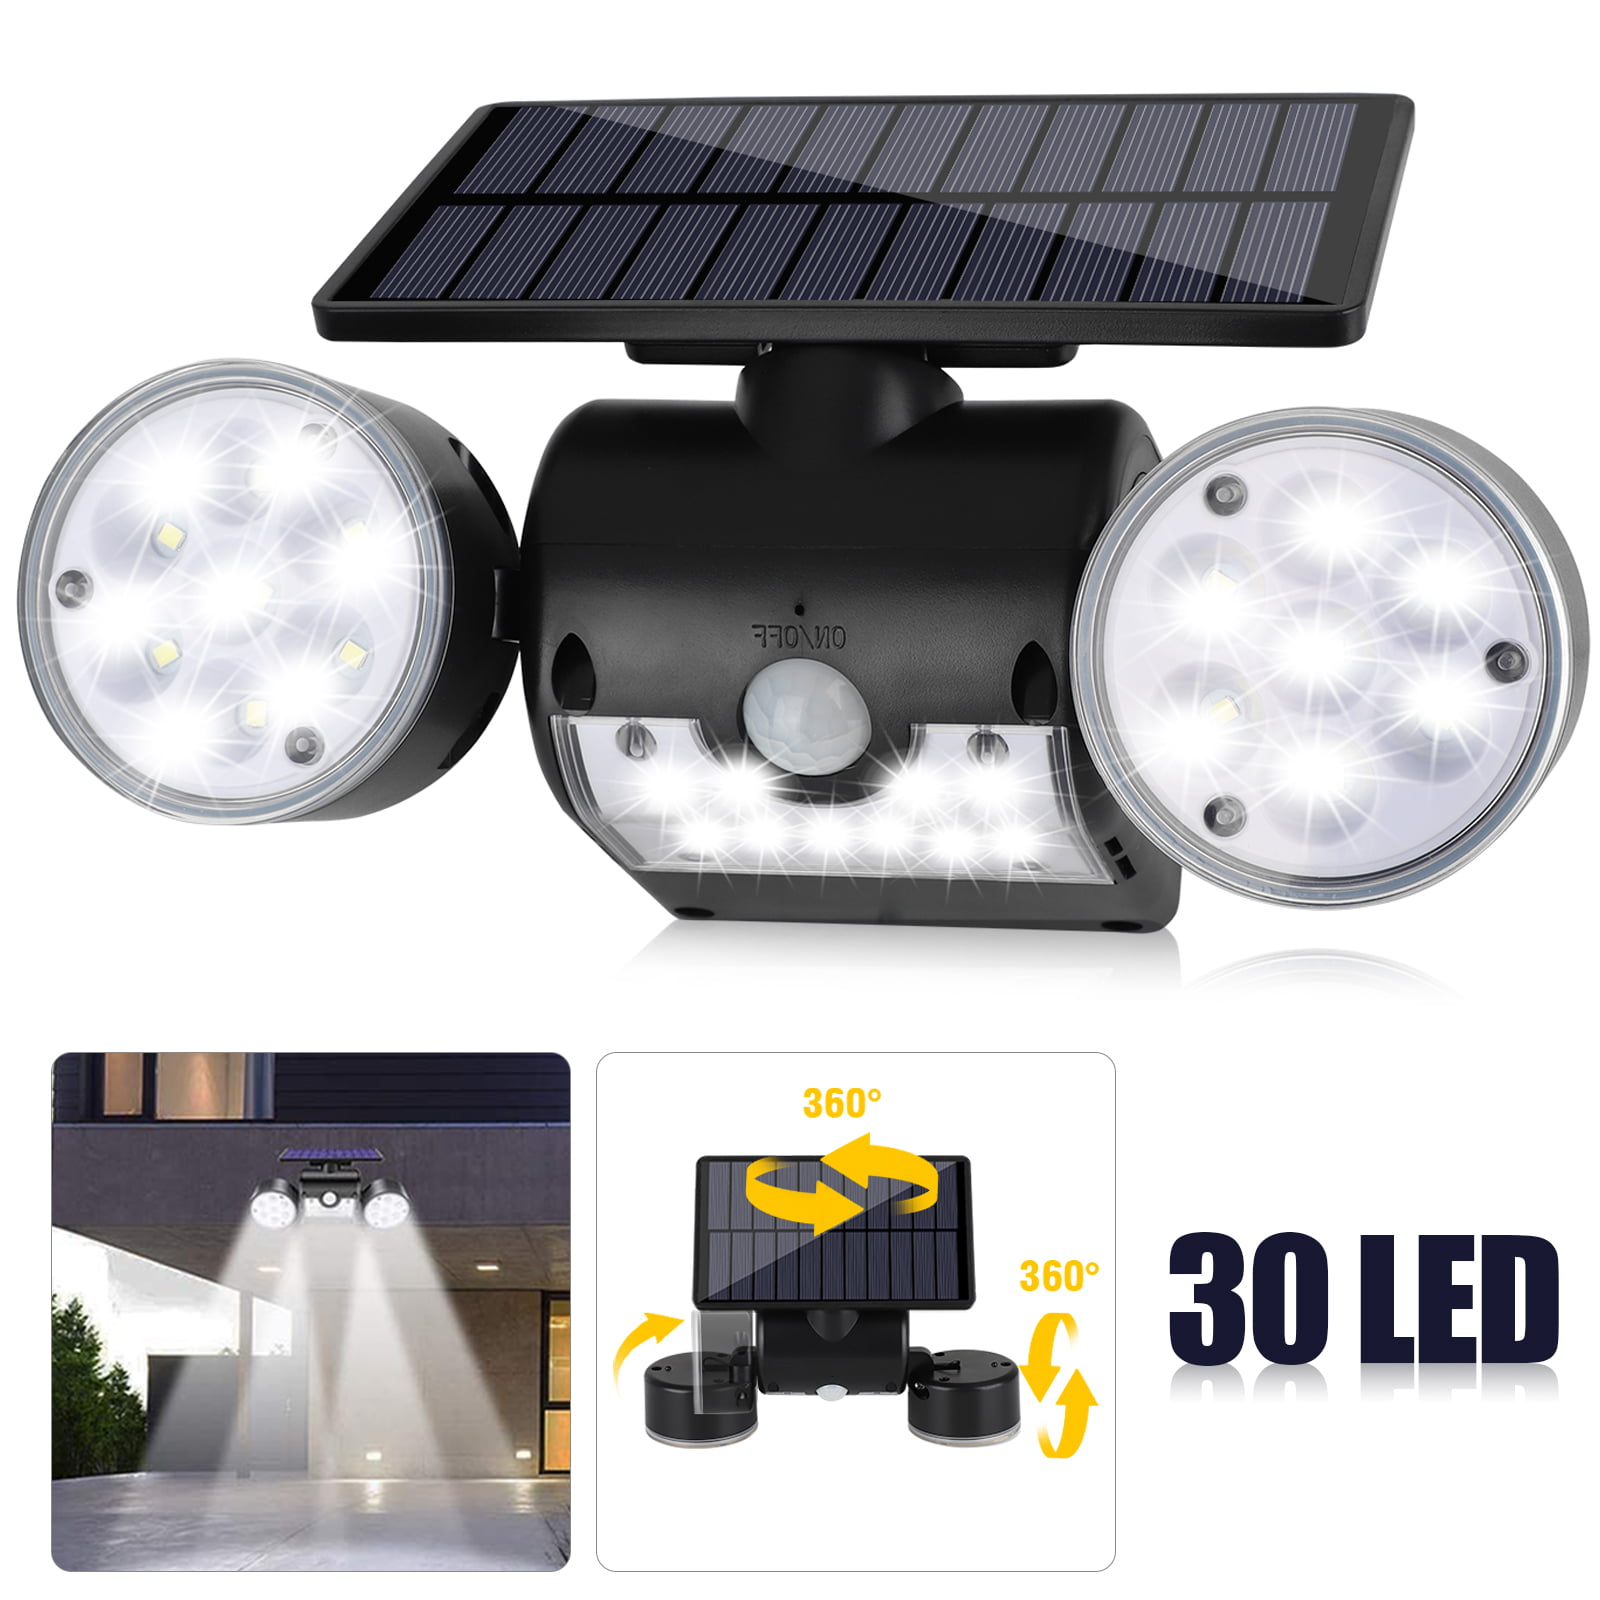 22 Black LED Solar Power Motion Sensor Light Dual Security Floodlight Outdoor US 